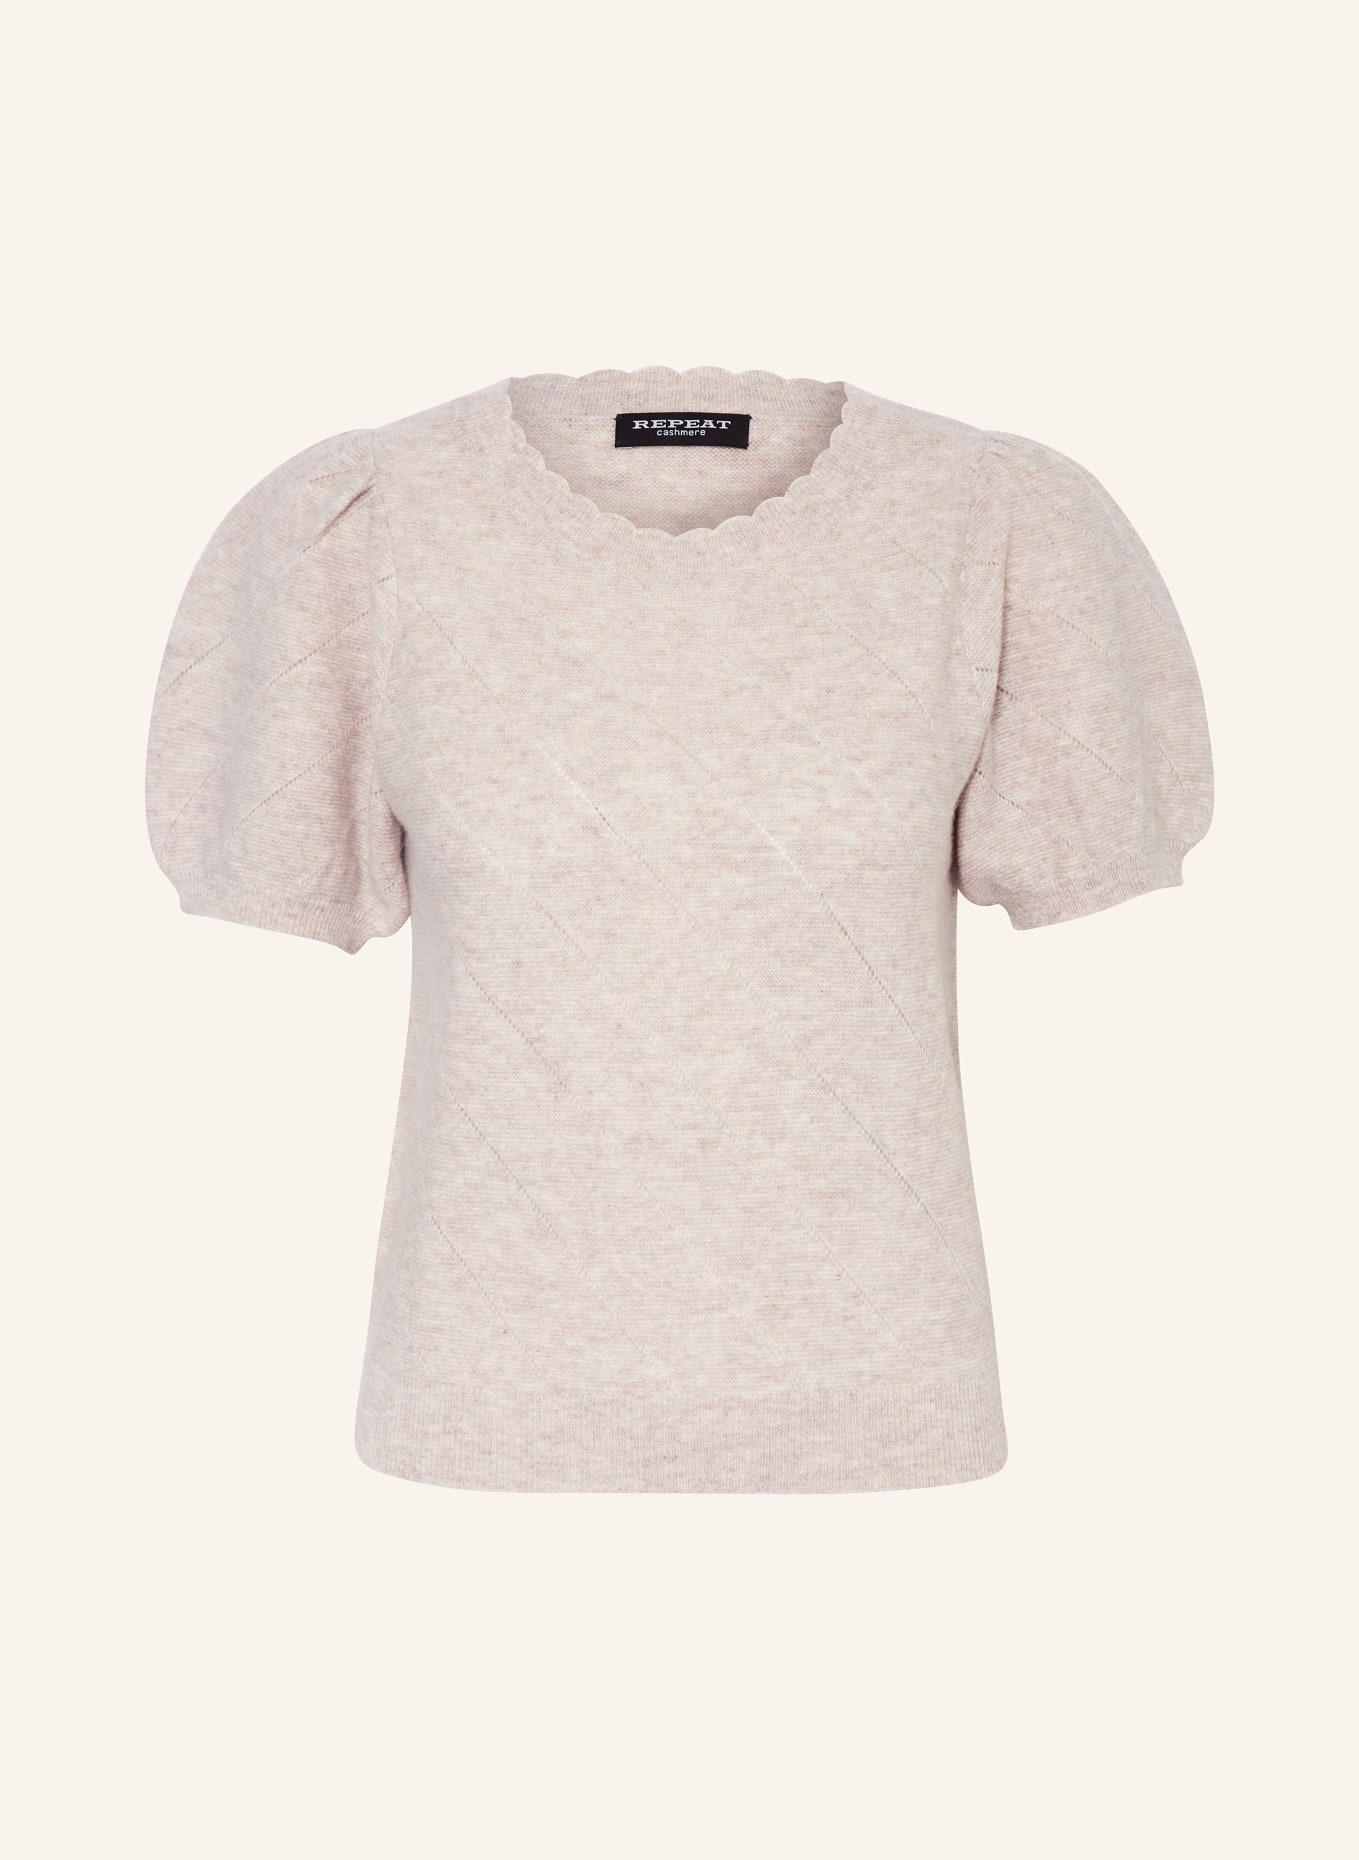 REPEAT Strickshirt aus Cashmere, Farbe: TAUPE (Bild 1)